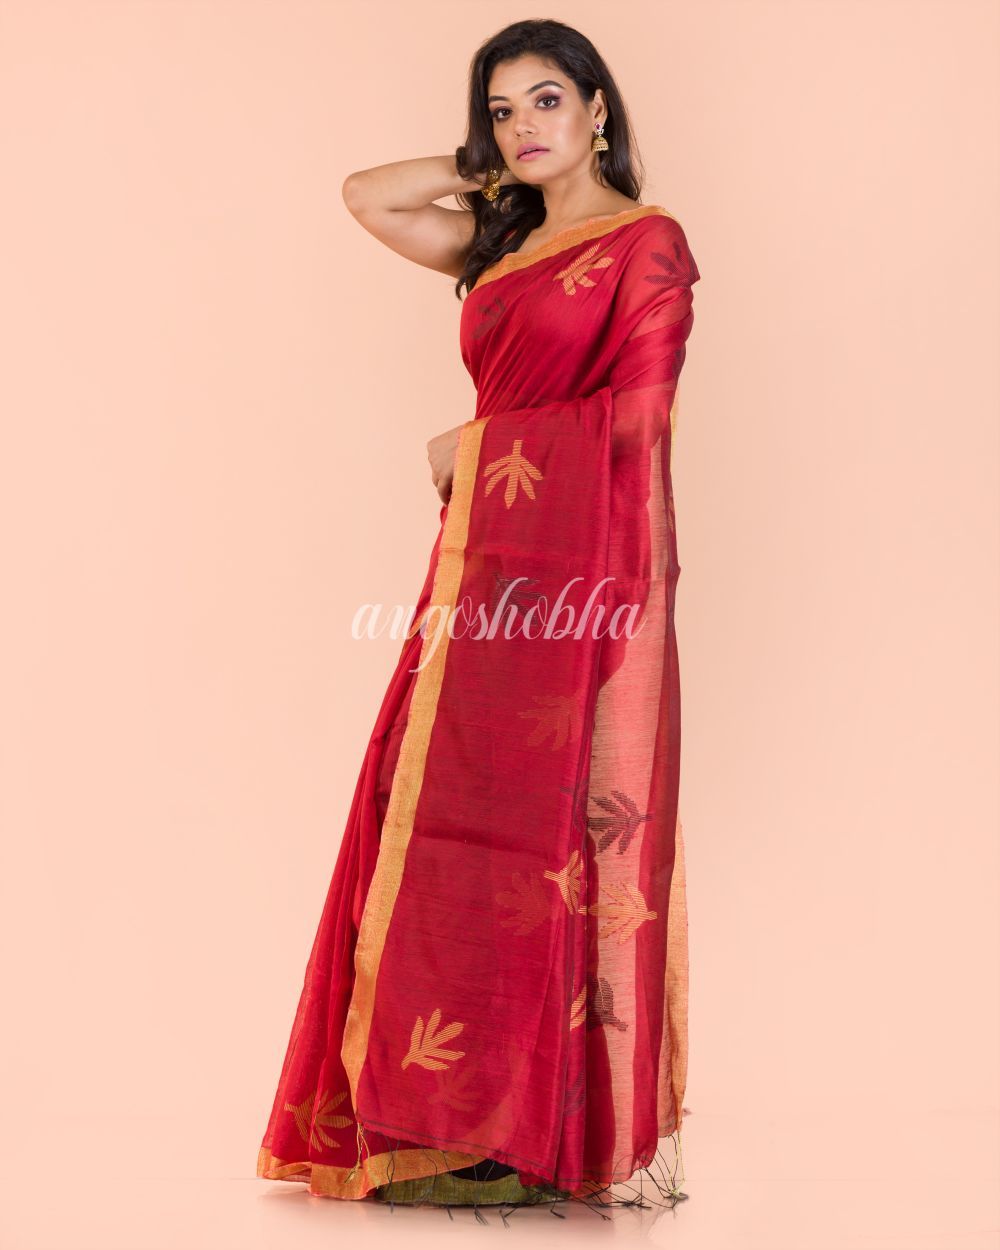 Women's Red Blended Cotton Jamdani Saree - Angoshobha